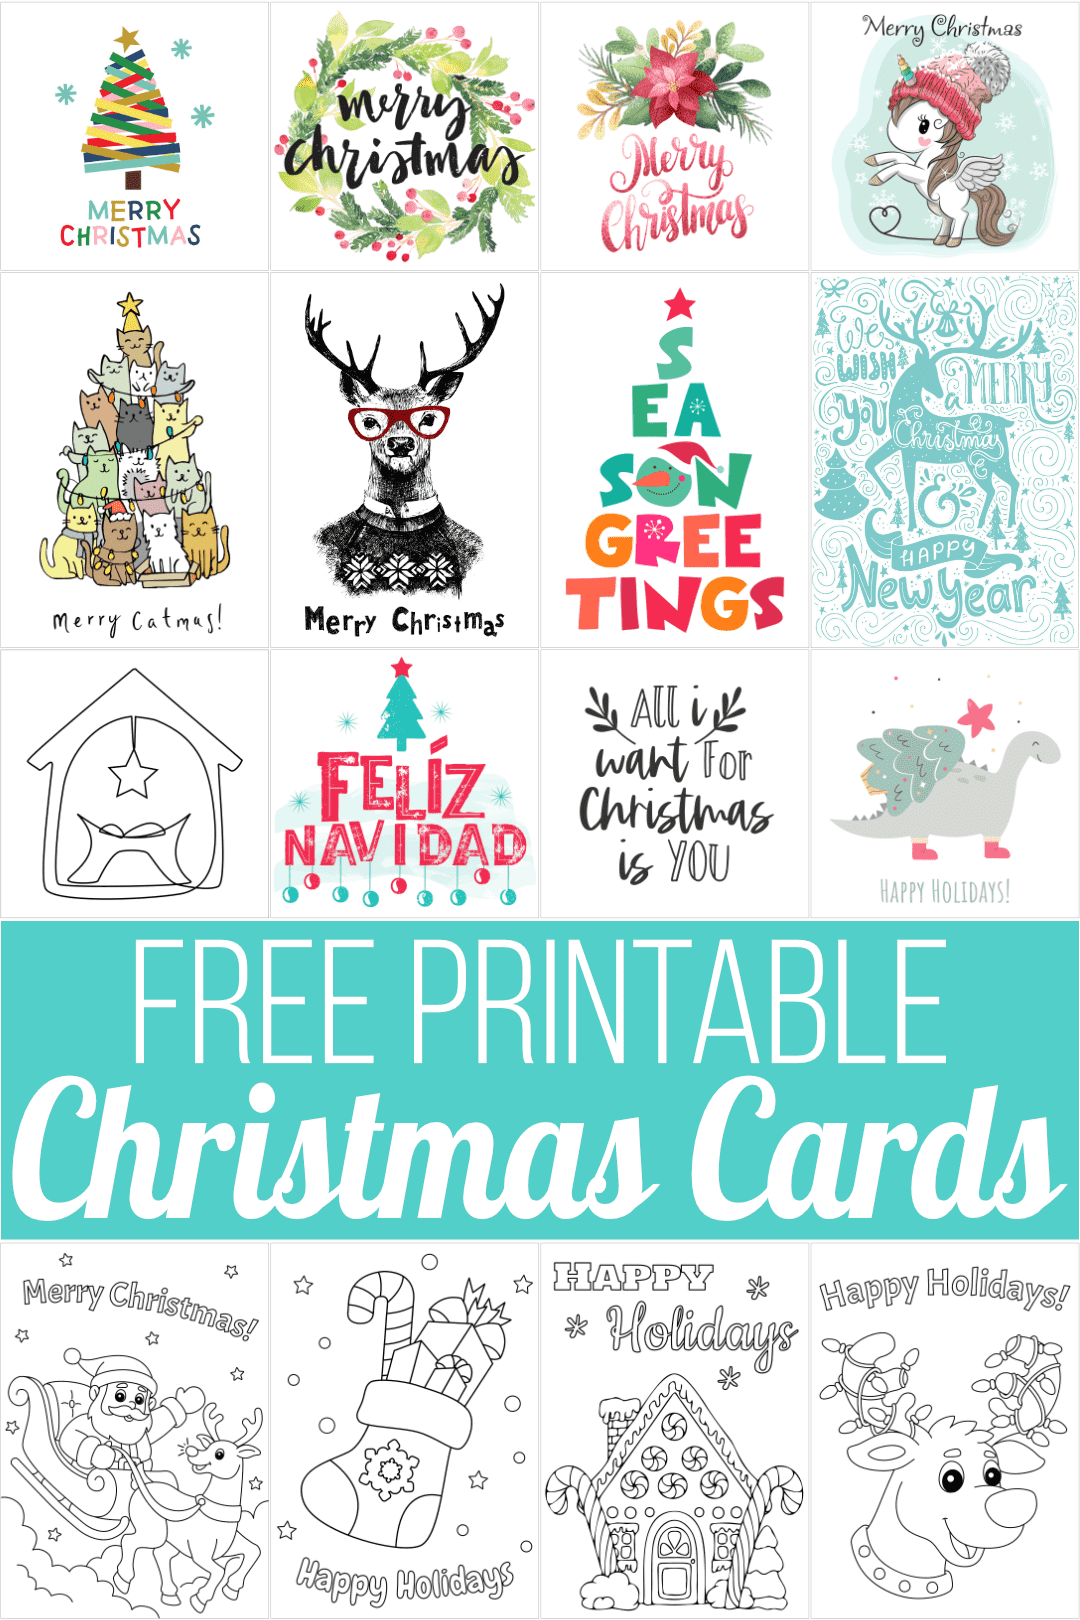 printable-4-fold-christmas-cards-cards-info